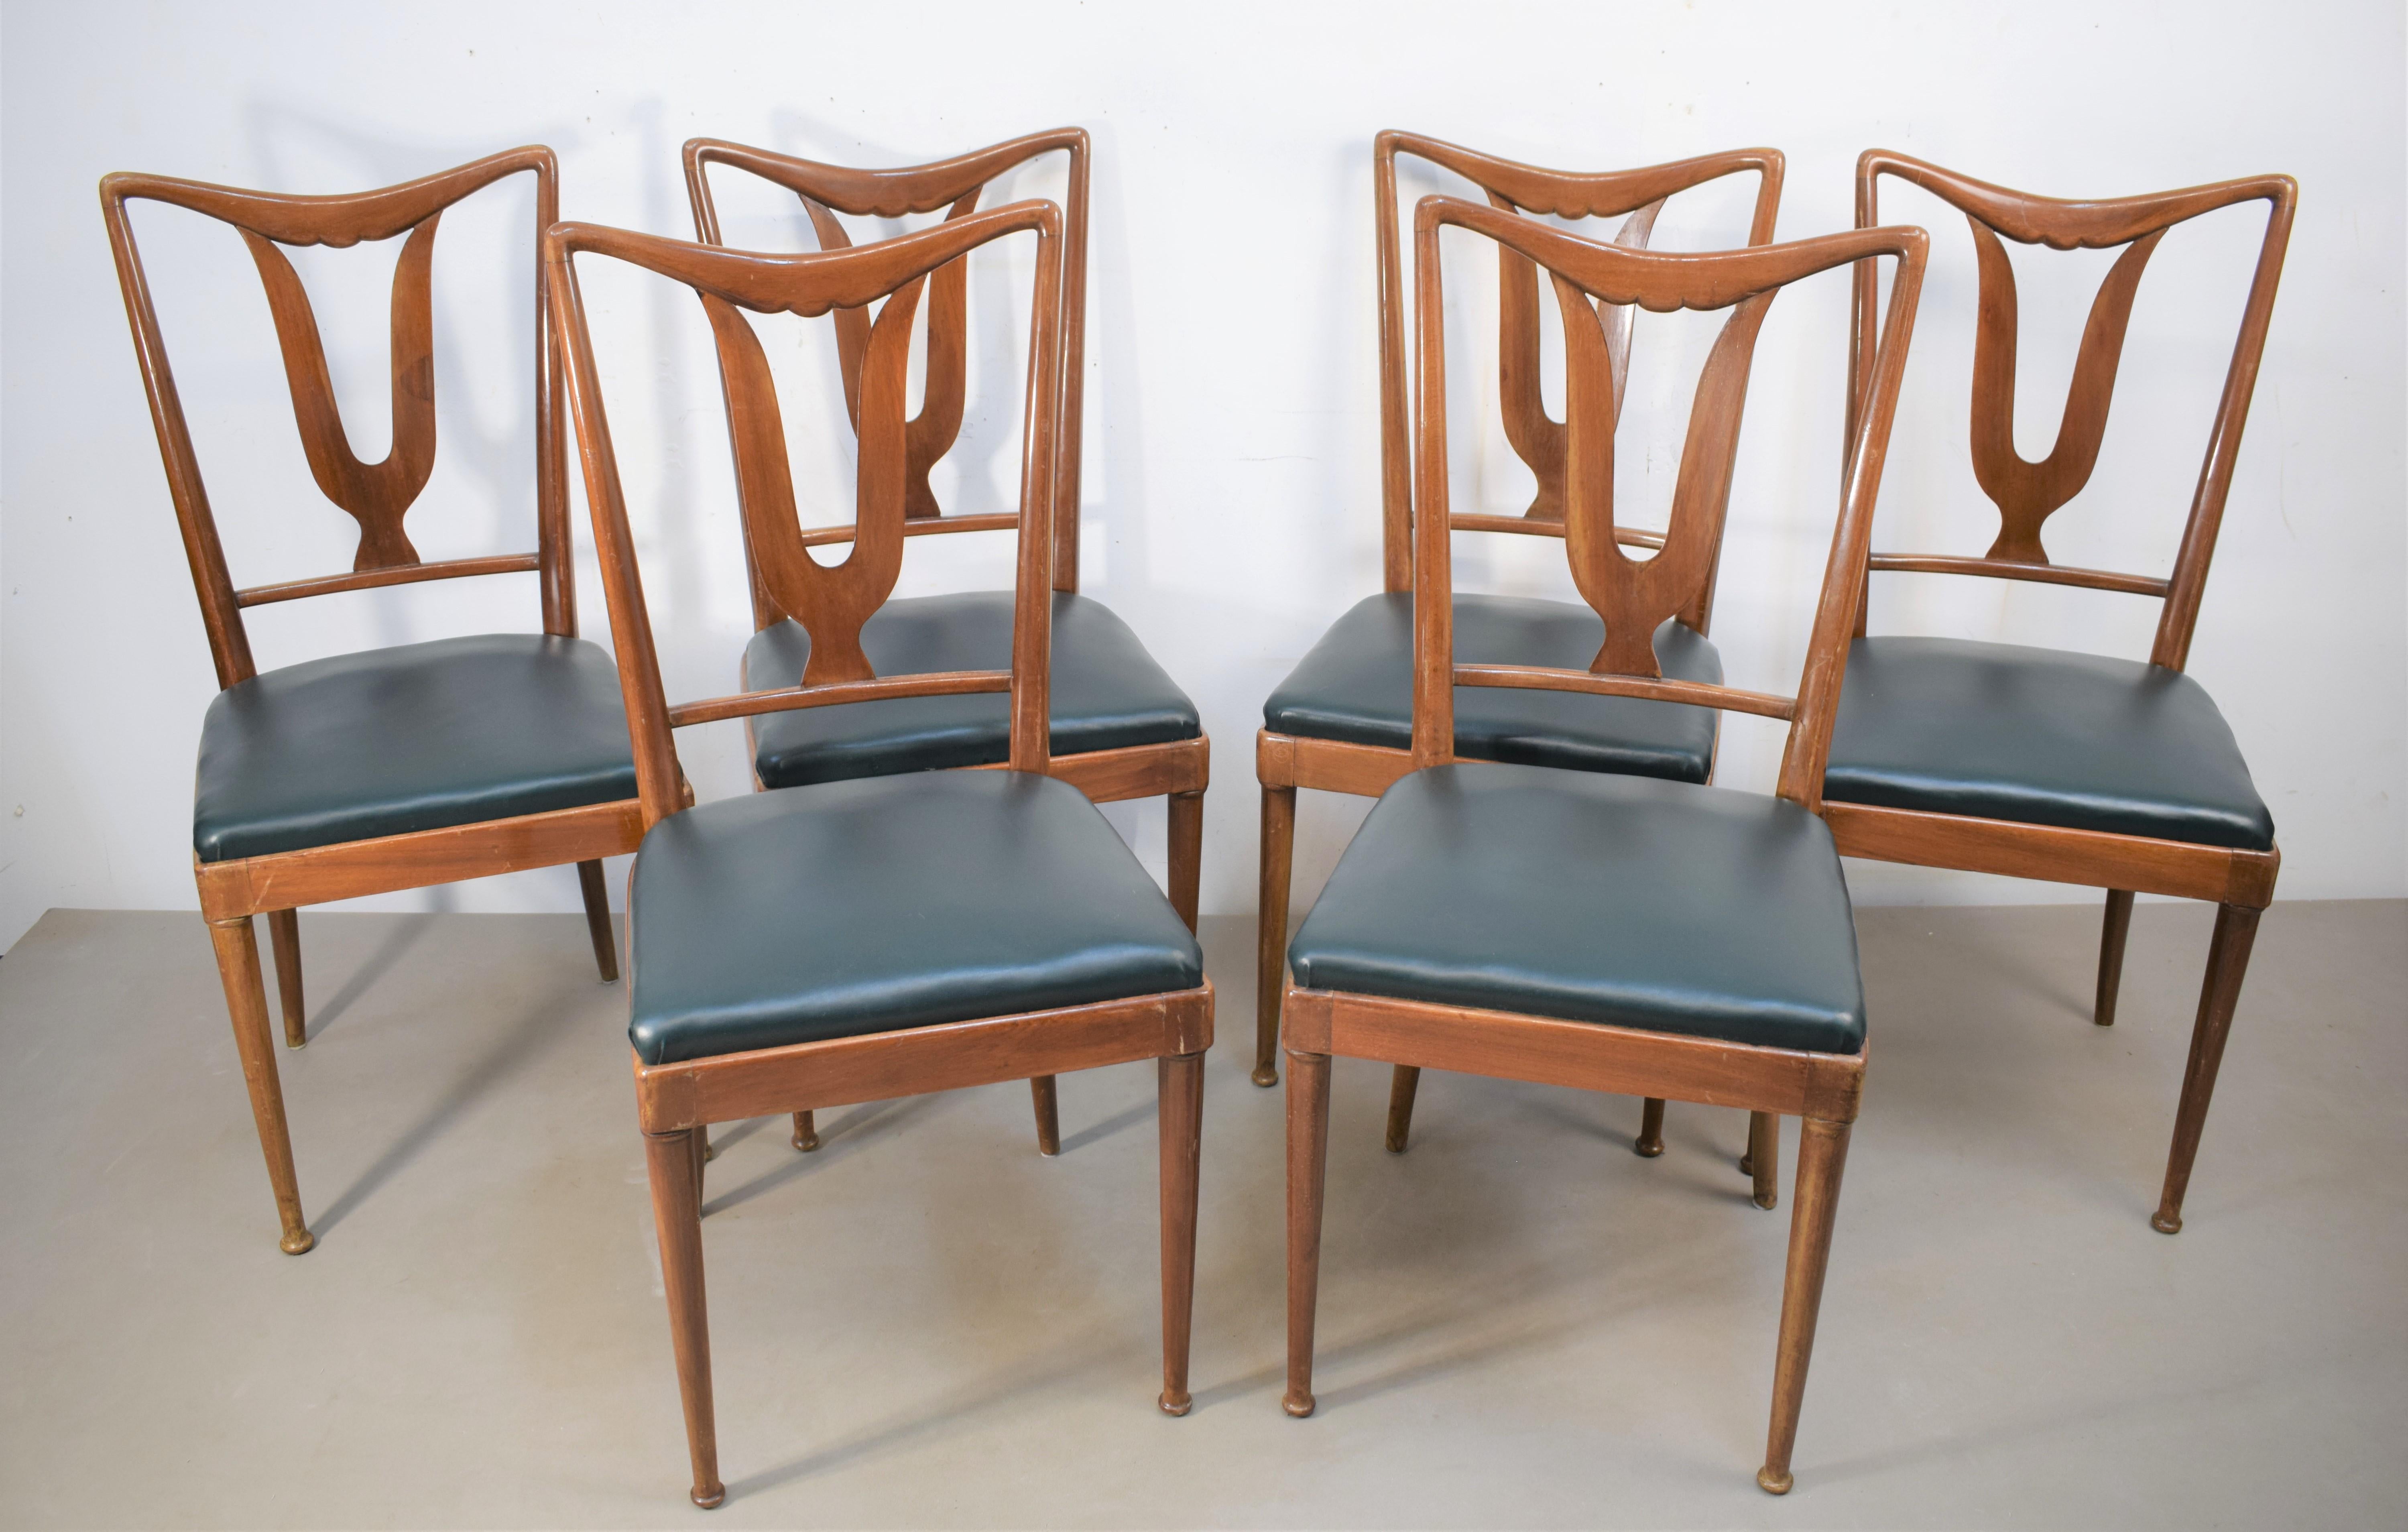 Set of six Italian chairs, 1950s.
Dimensions: H= 98 cm; W= 45 cm; D=50 cm; H S=48 cm.